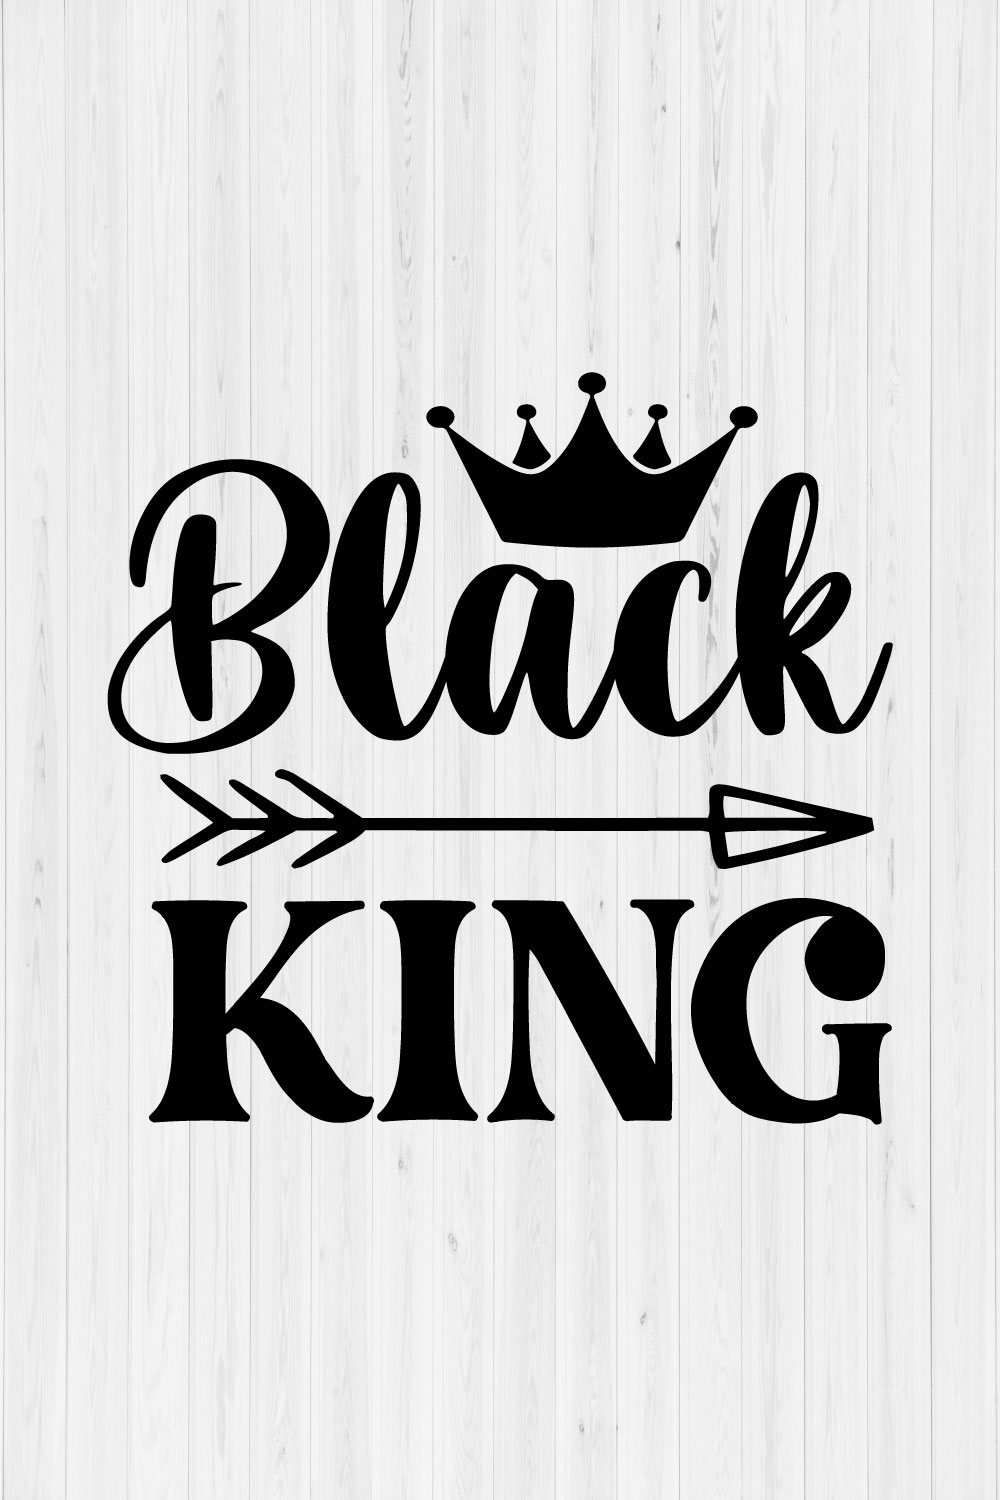 Black King pinterest preview image.